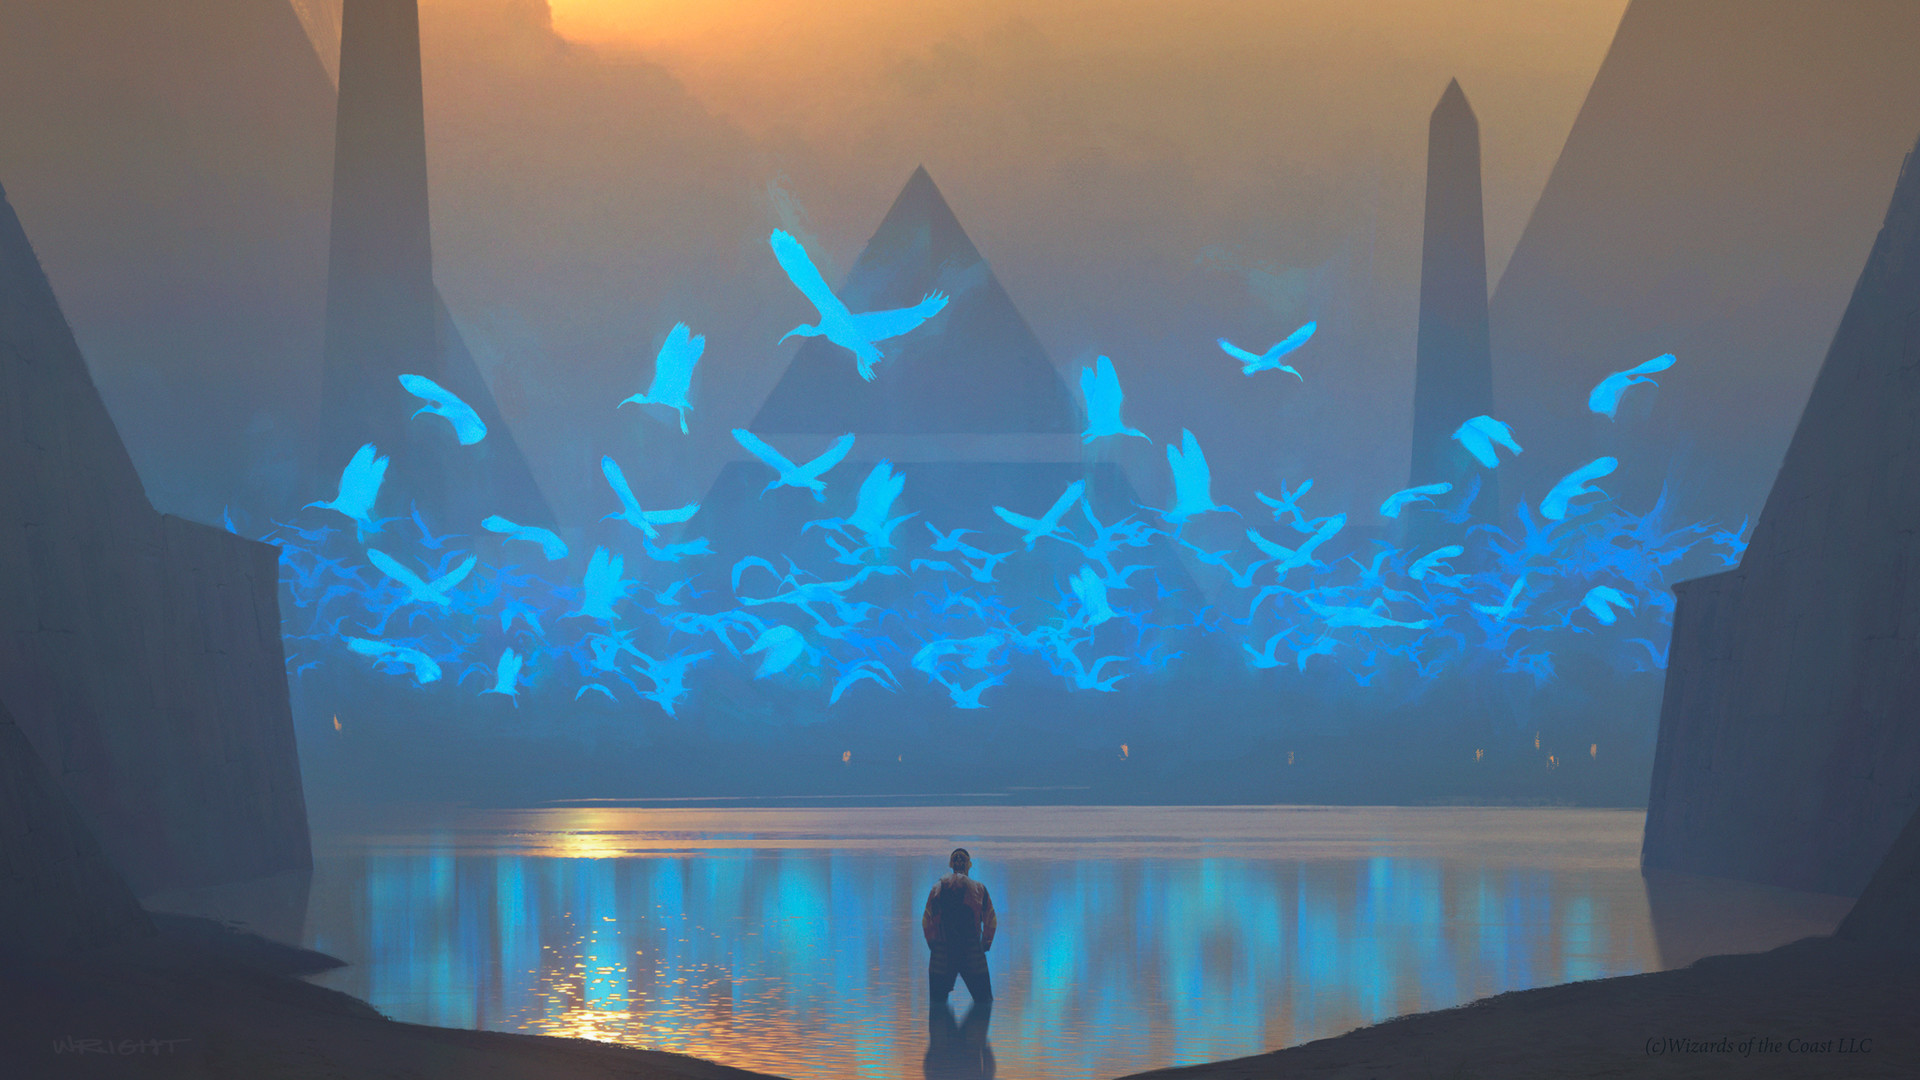 Lake Cranes Bird Pyramid Fantasy Art Mountains Mist Reflection Magic The Gathering Cyan 1920x1080